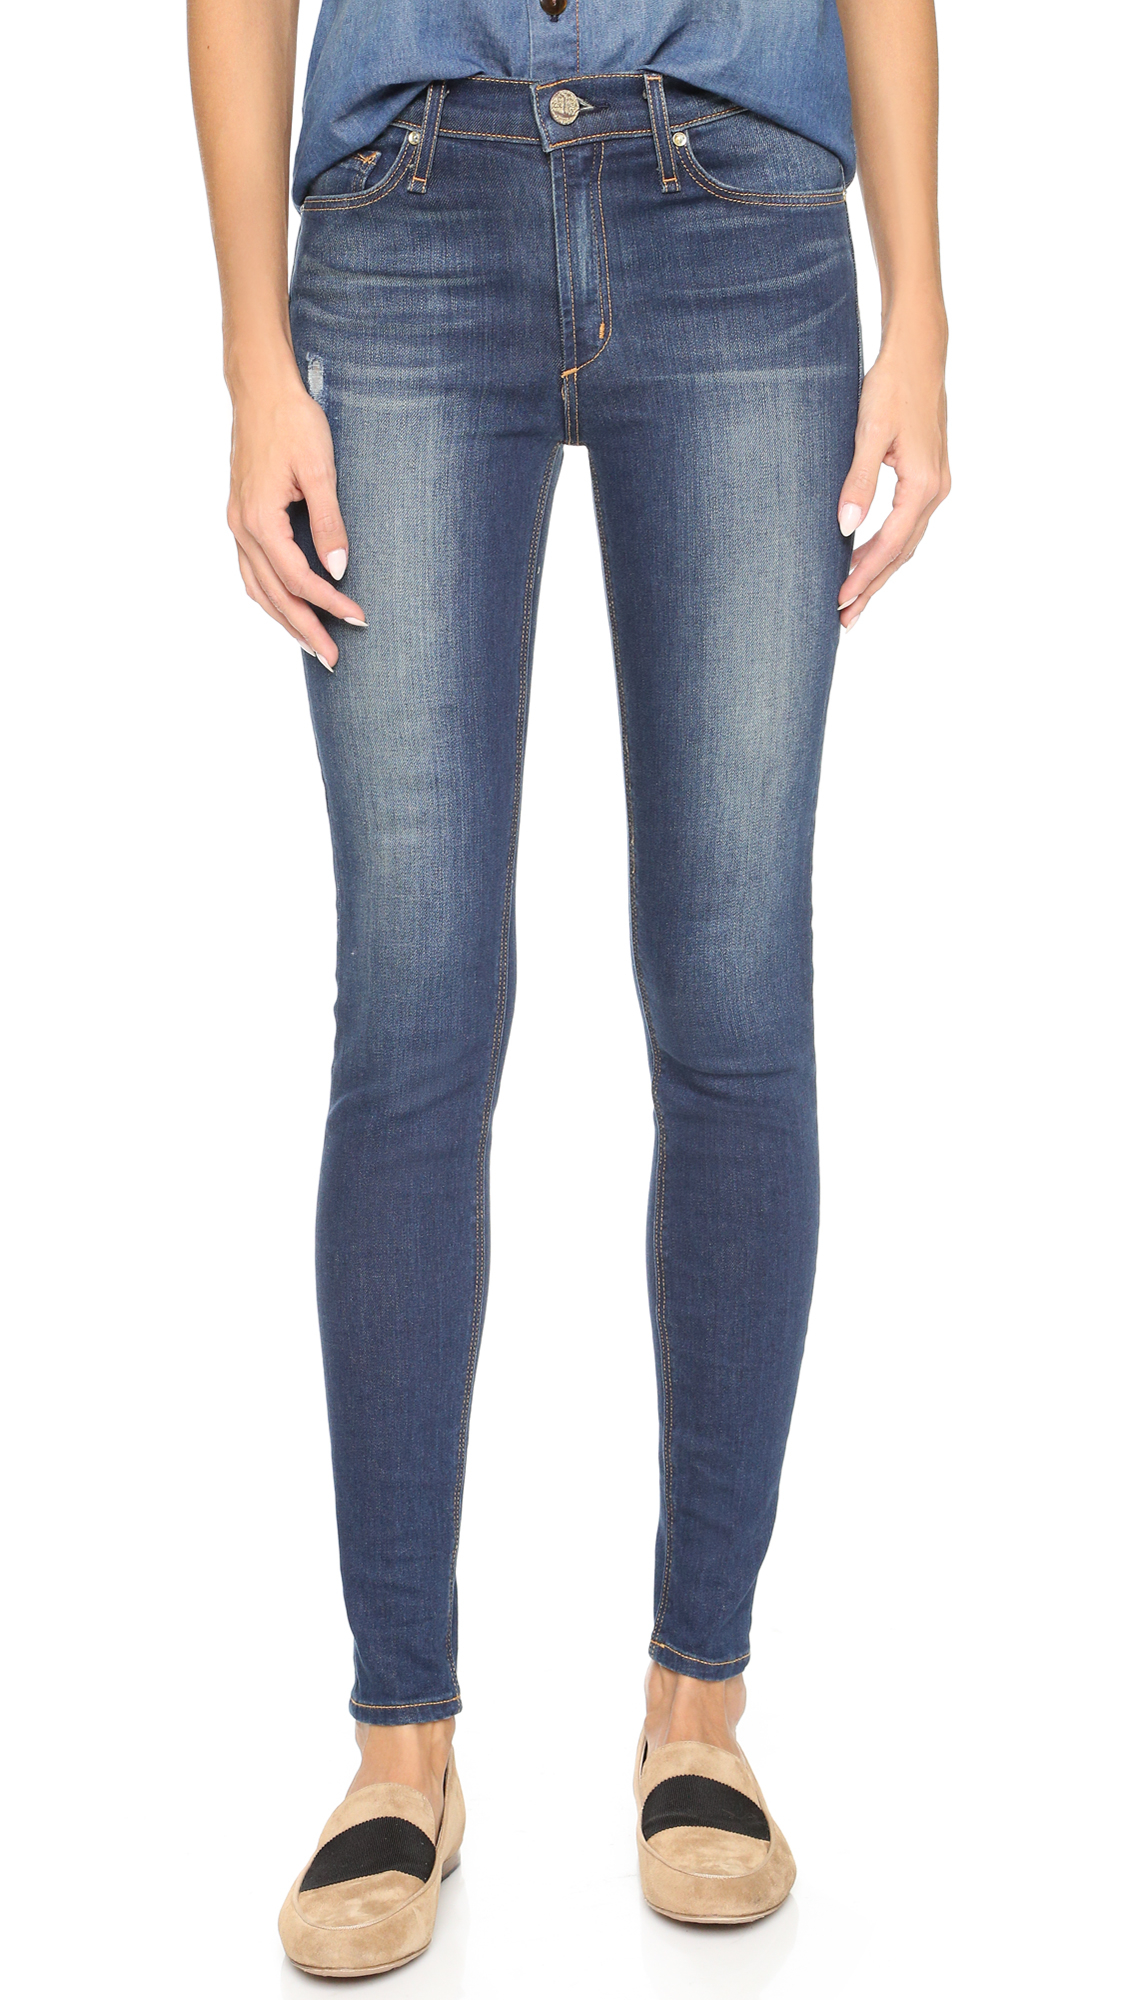 Lyst - Mcguire Denim Newton Skinny Jeans in Blue